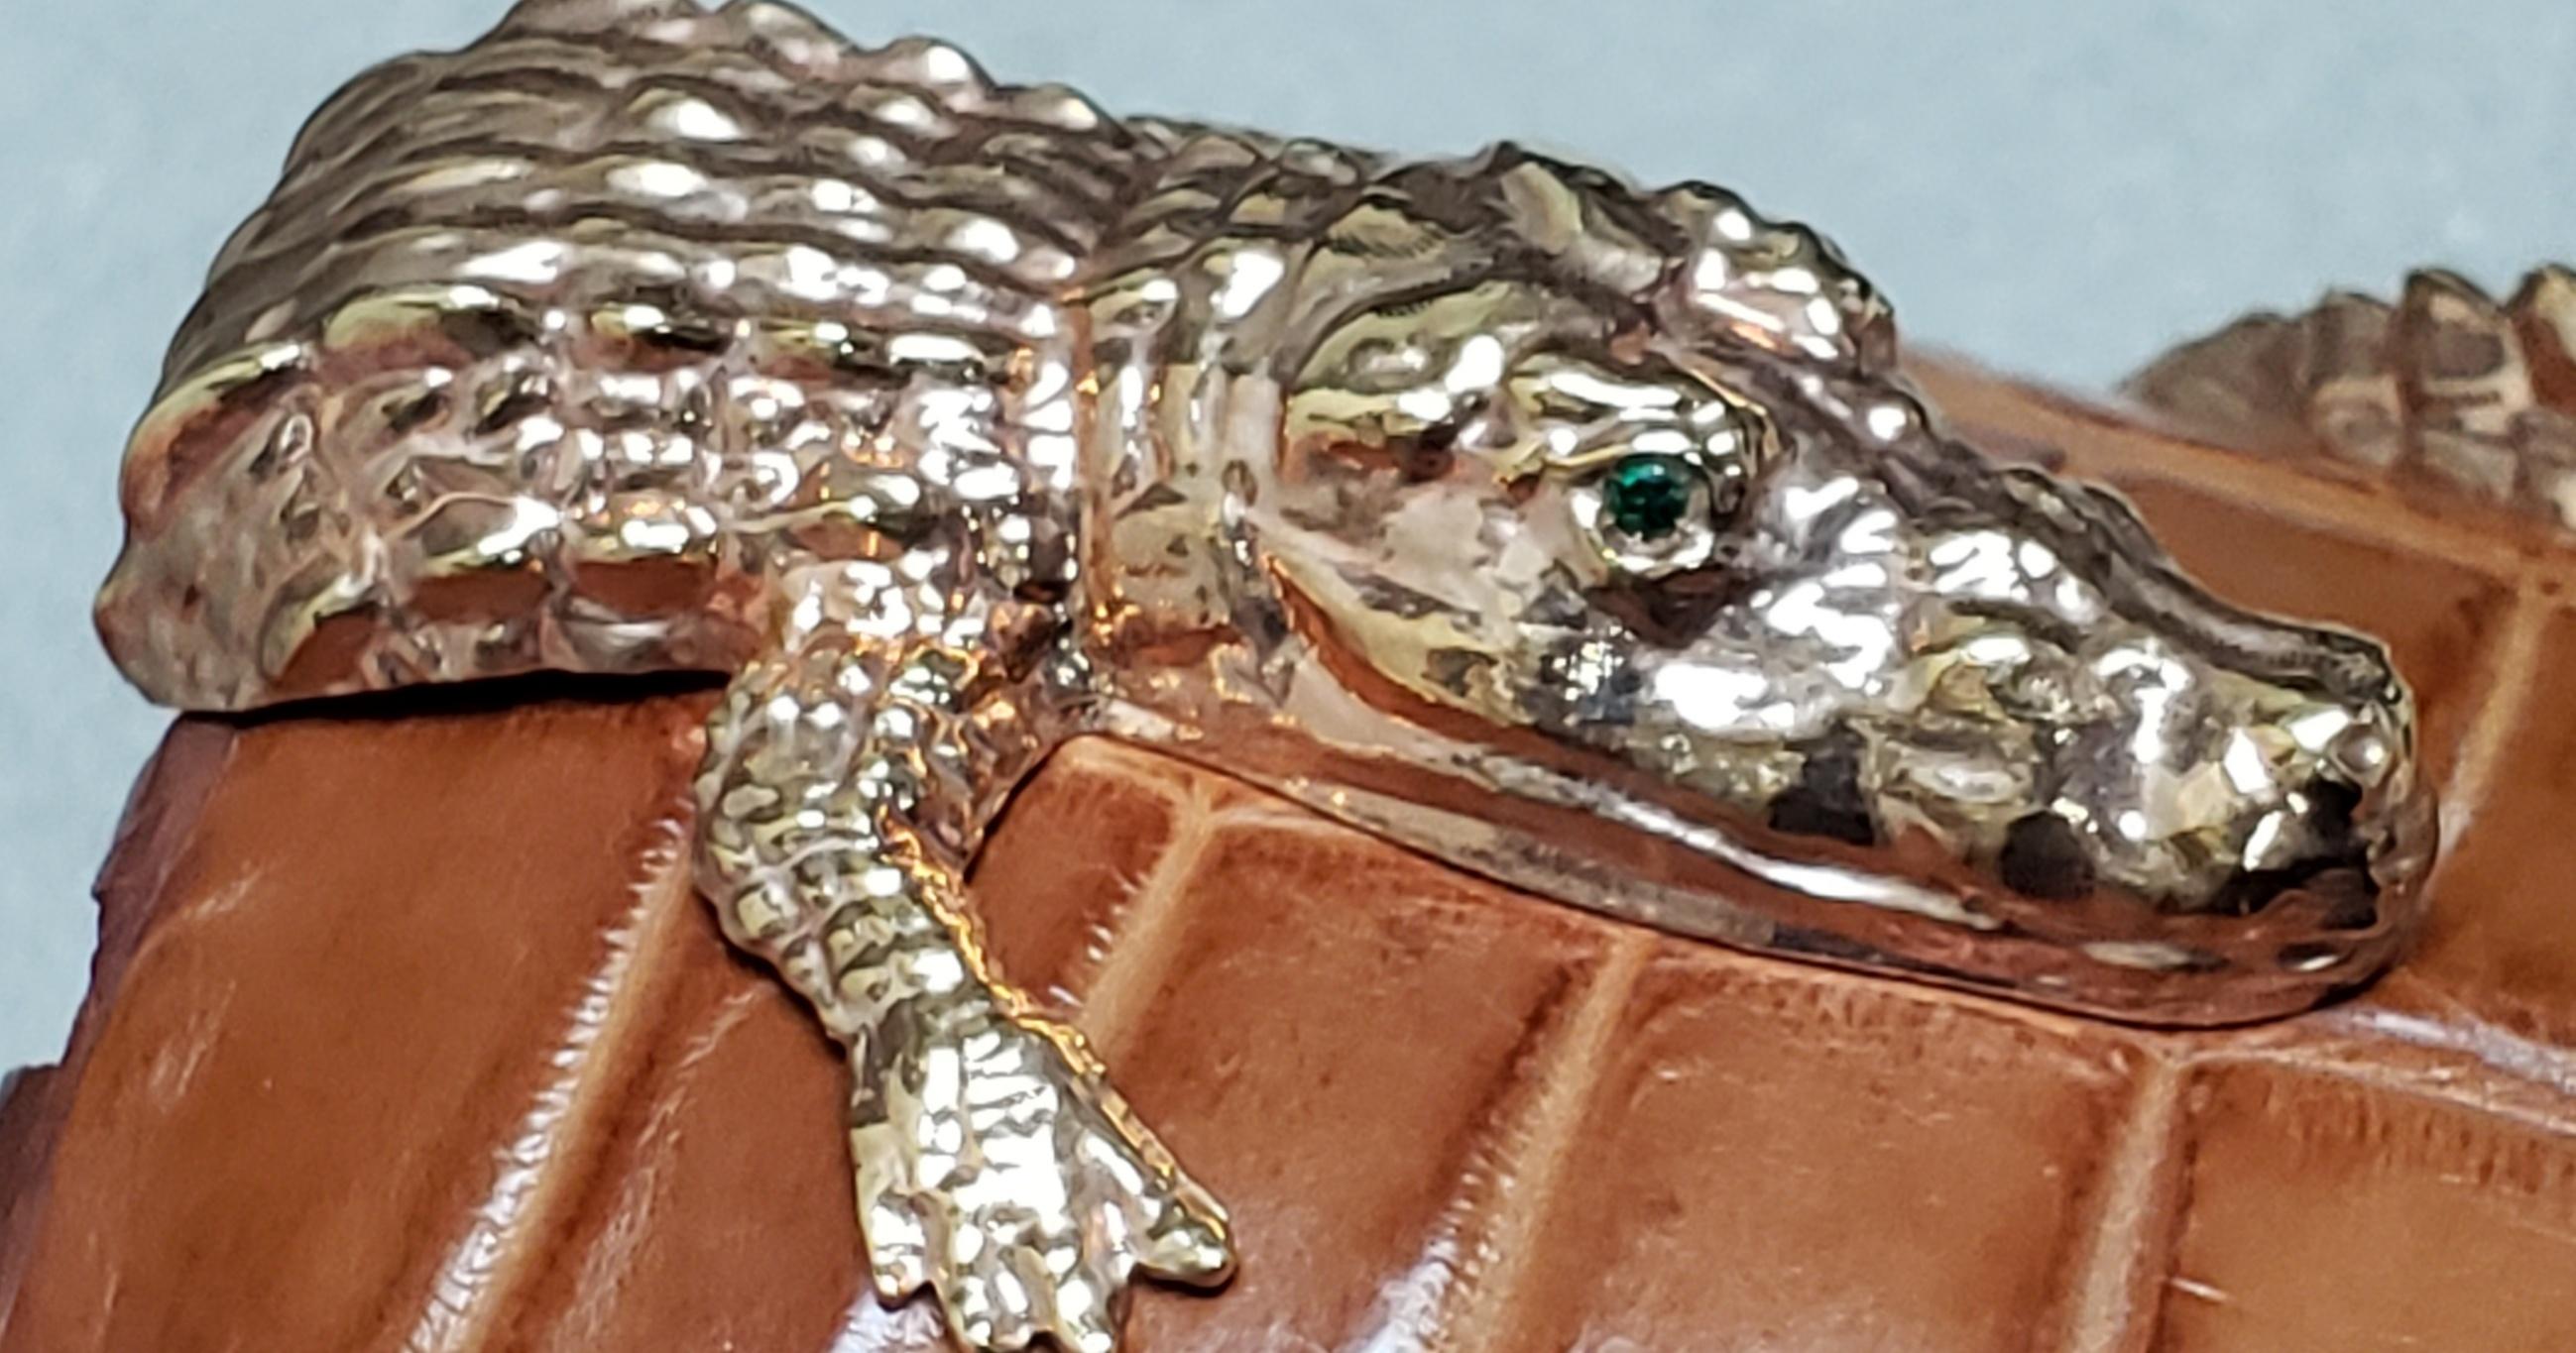 SABBADINI Italy 18K Rose Gold Alligator cuff bracelet 3.25